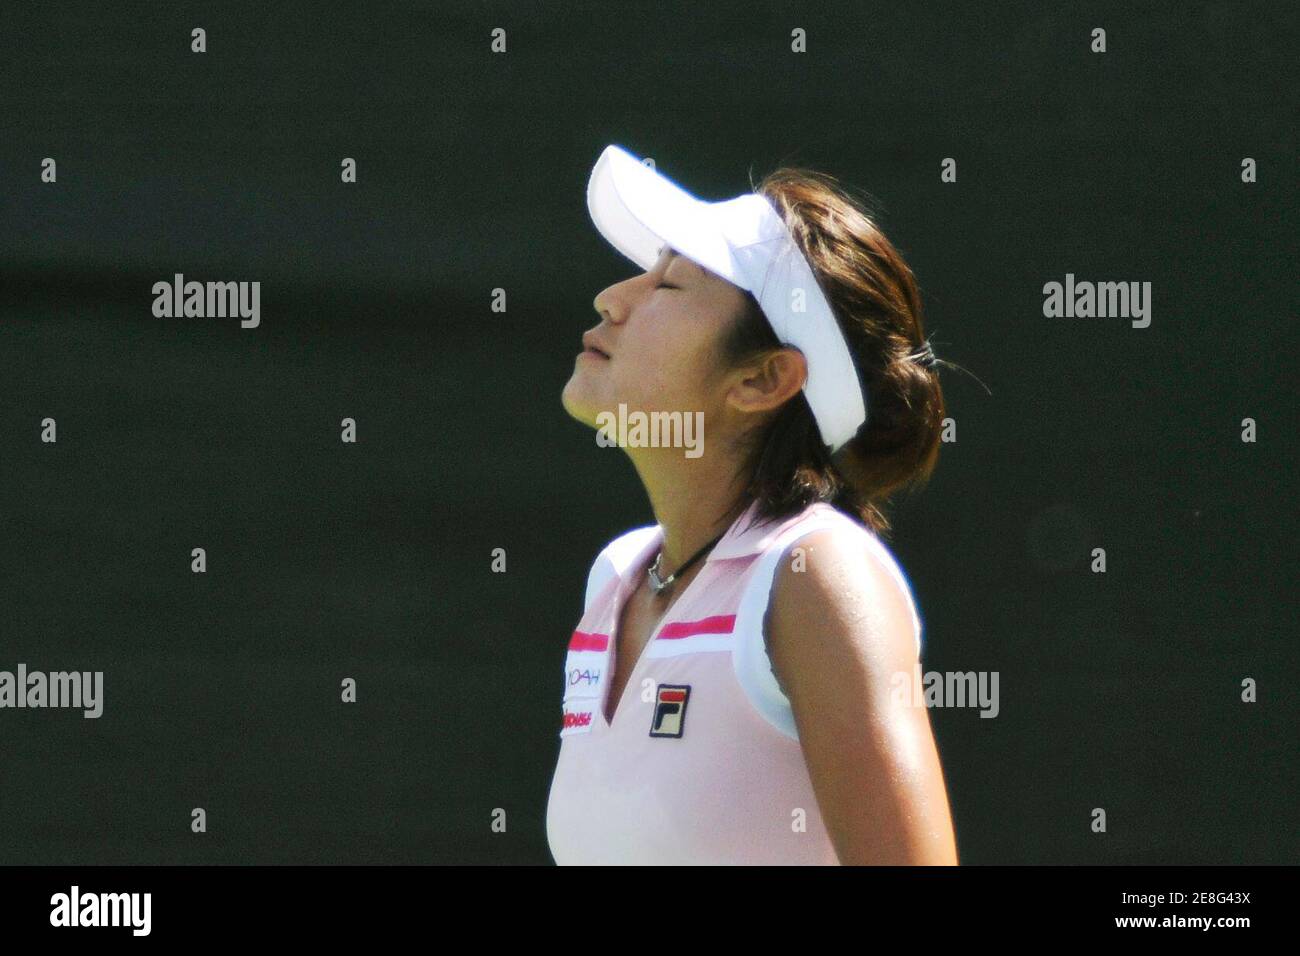 Japan's Akiko Morigami reacts during her match against Katarina Srebotnik of Slovenia on the first day of the WTA Dubai Tennis Championships February 25, 2008. REUTERS/Jumana El Heloueh (UNITED ARAB EMIRATES) Foto Stock